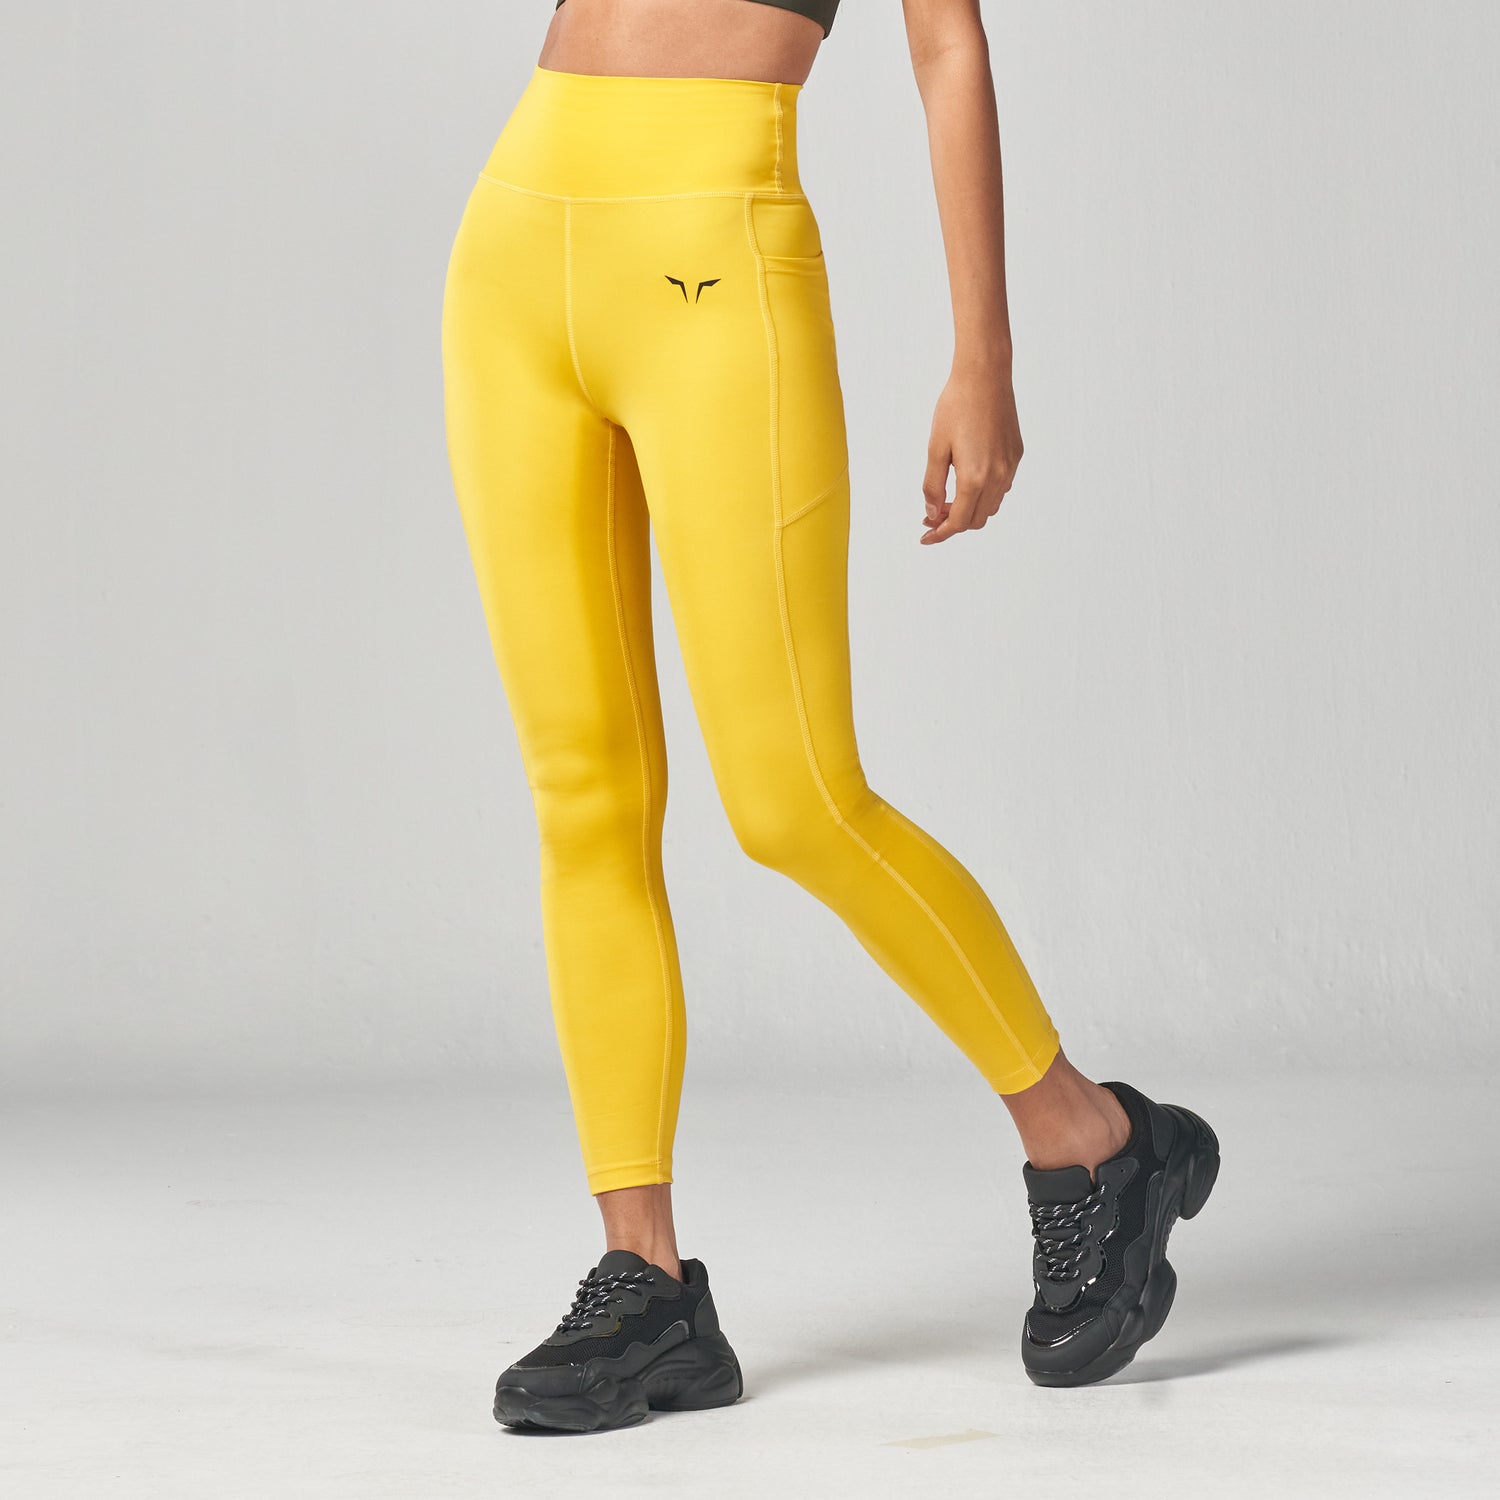 Essentials Women's High Rise Capri Active Sculpt Legging, Bright  Yellow, X-Large